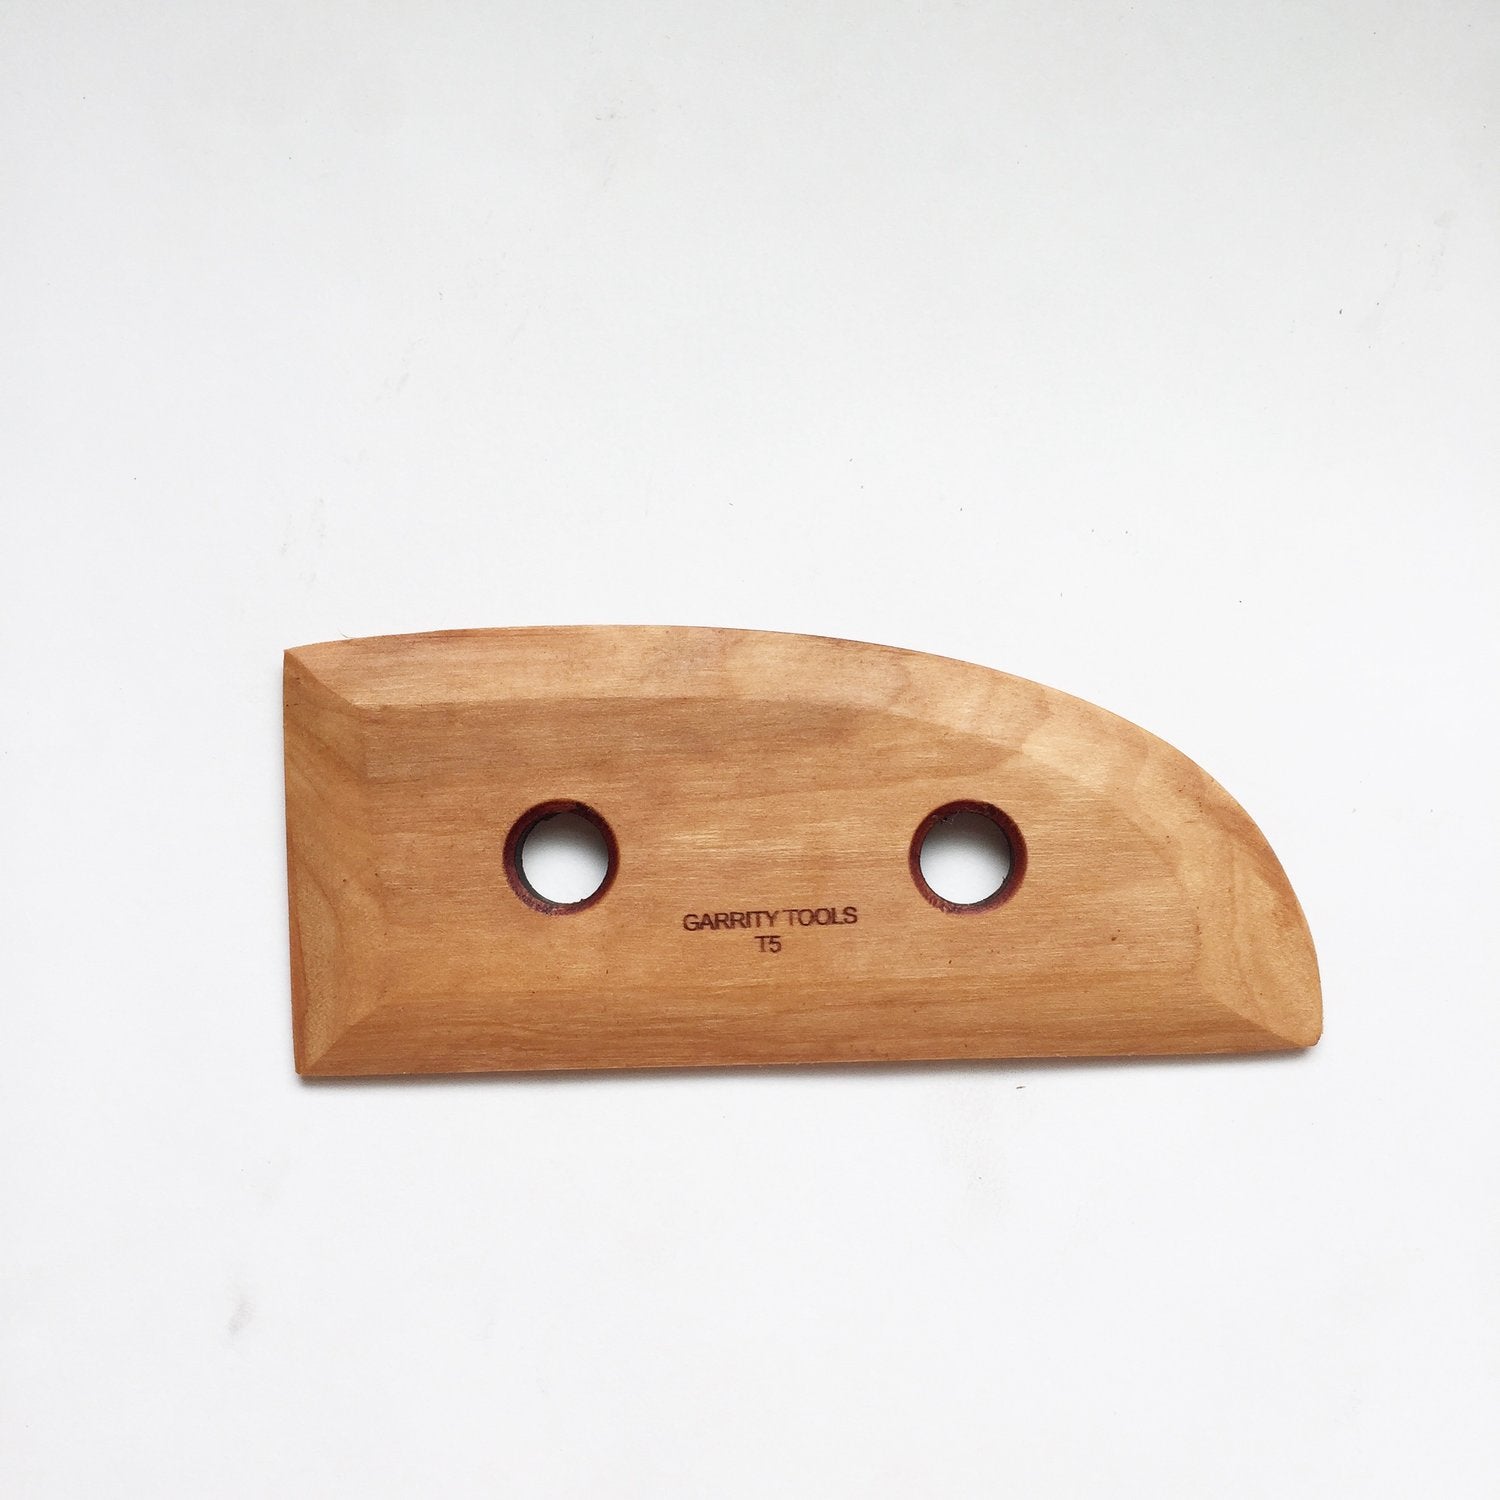 Garrity Tools T5 Wooden Rib image 1